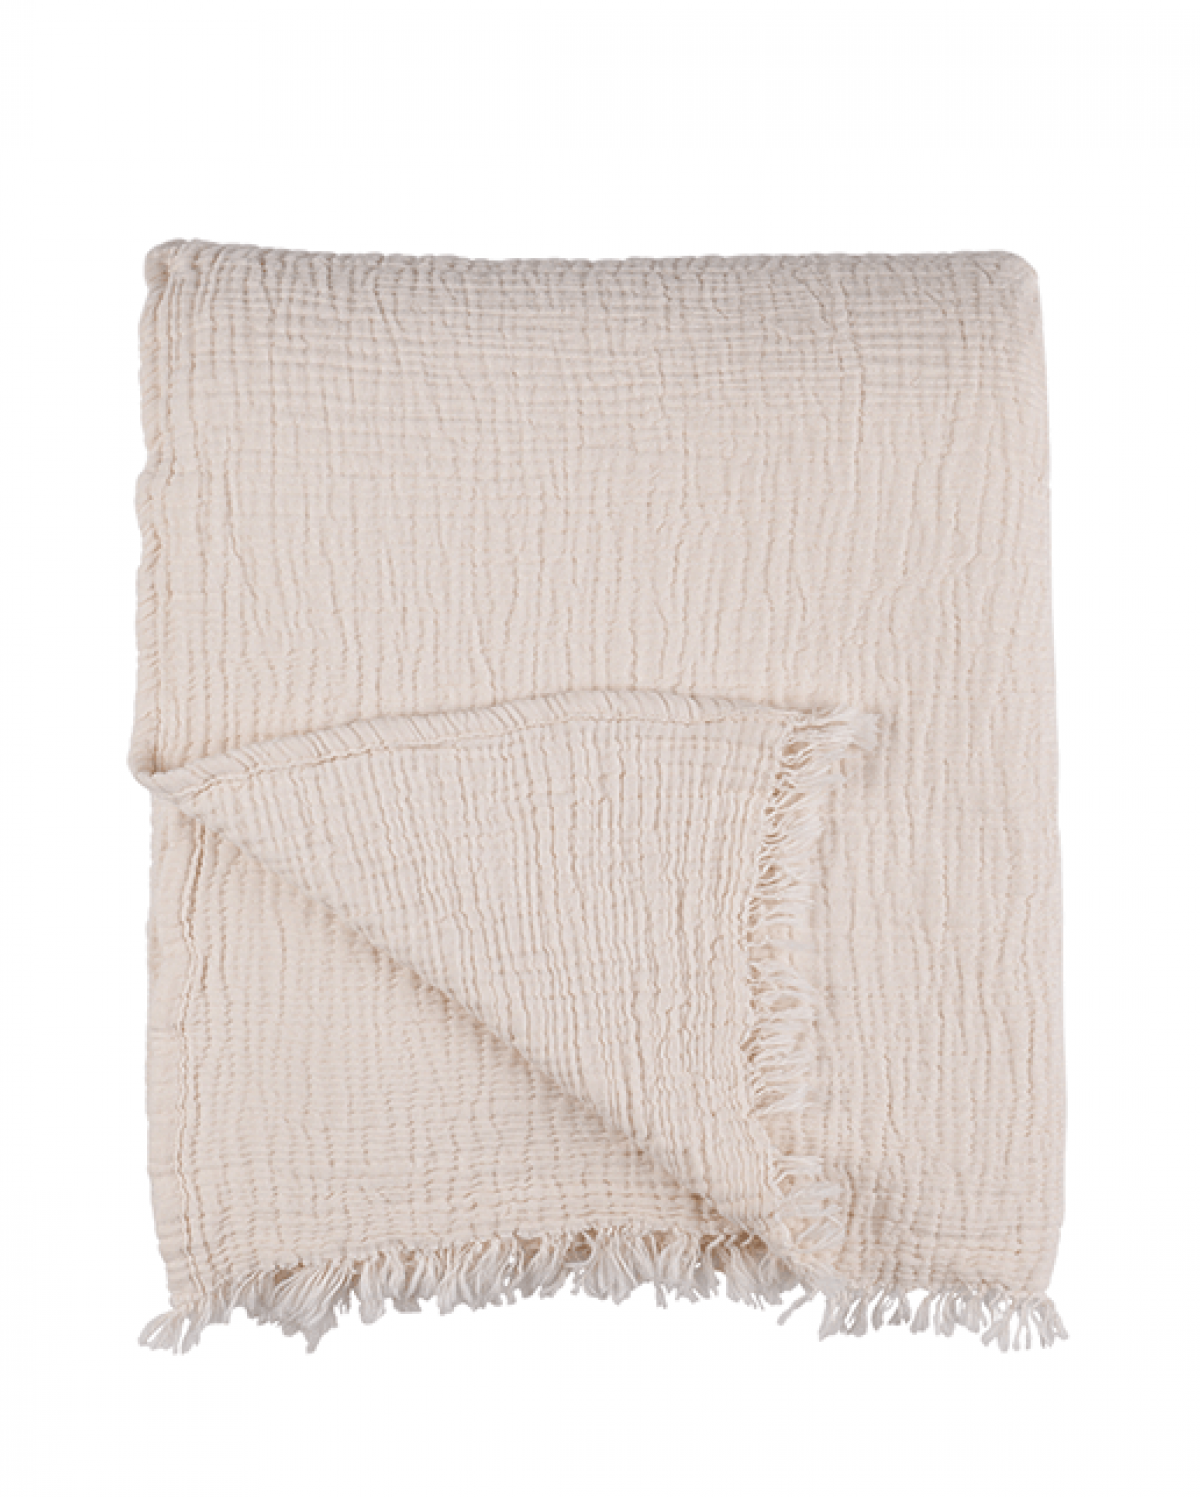 Cocoon Muslin Cotton Blanket- Ecru